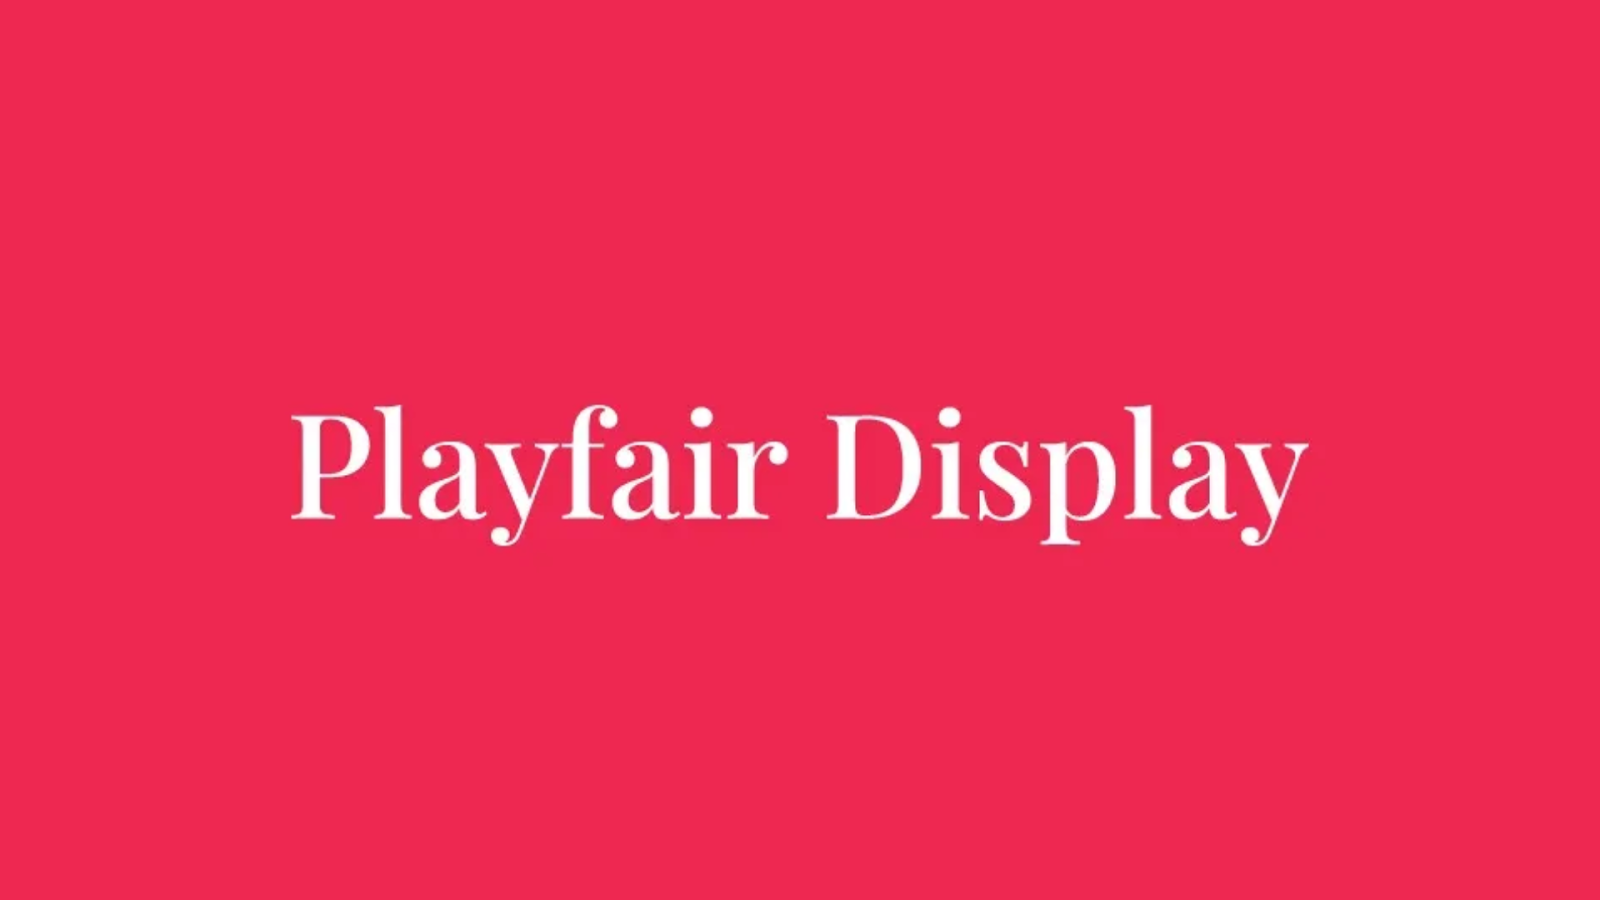 playfair display youtube thumbnail fonts